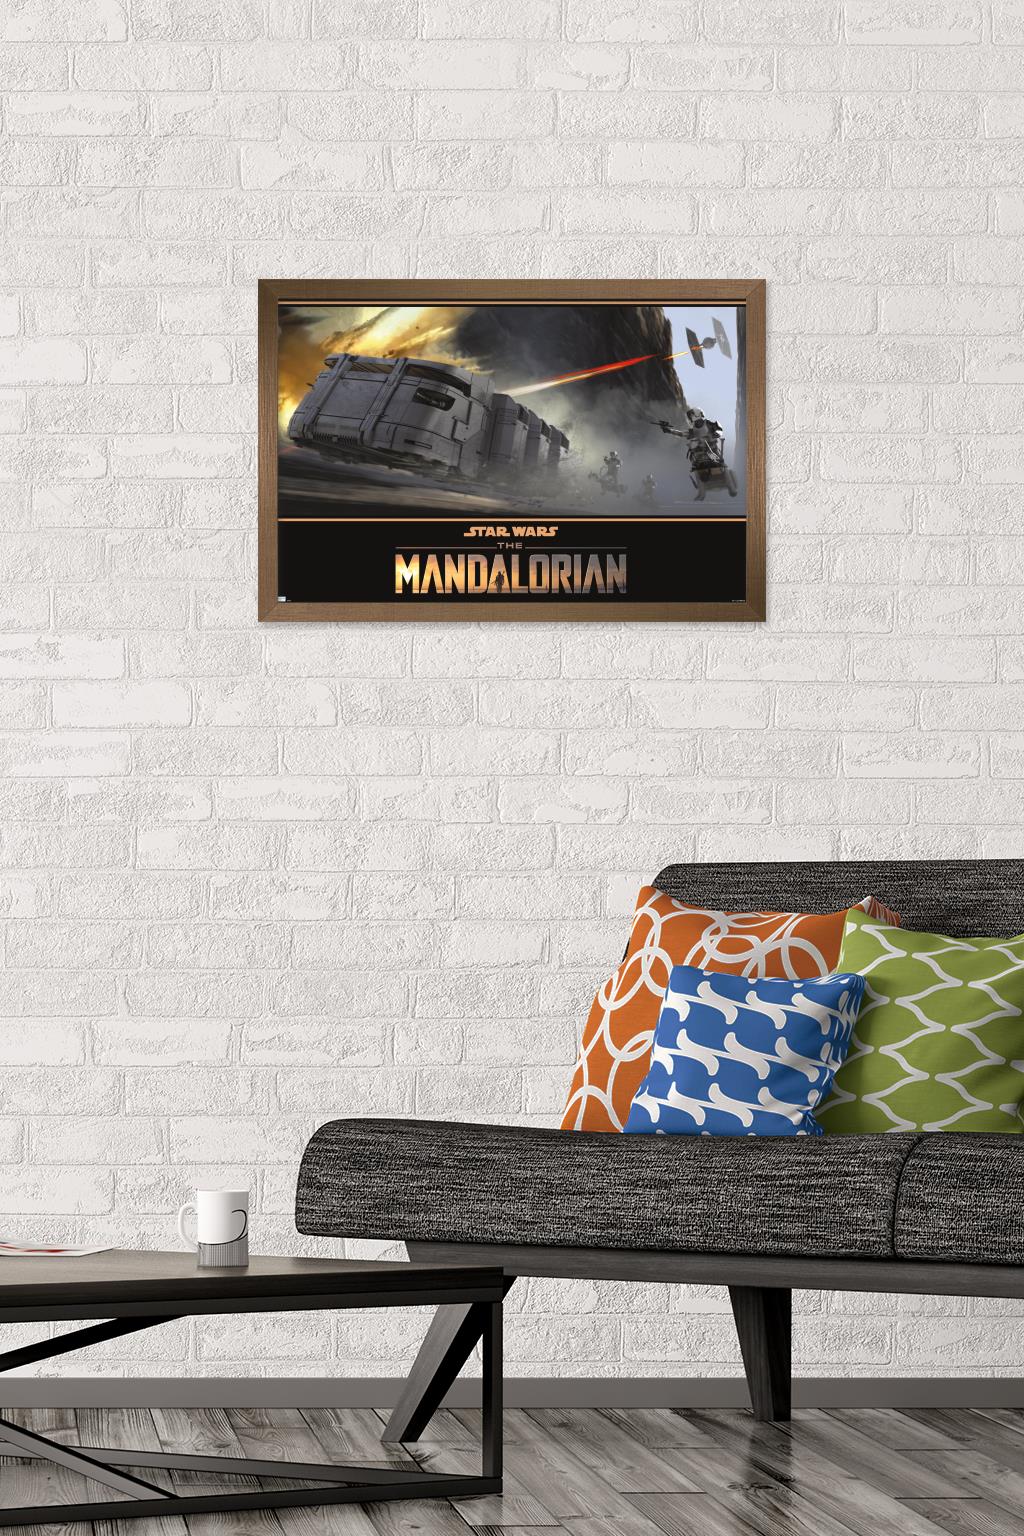 Star Wars: The Mandalorian Season 2 - TIE Fighter Battle Wall Poster, 14.725" x 22.375", Framed - image 2 of 5